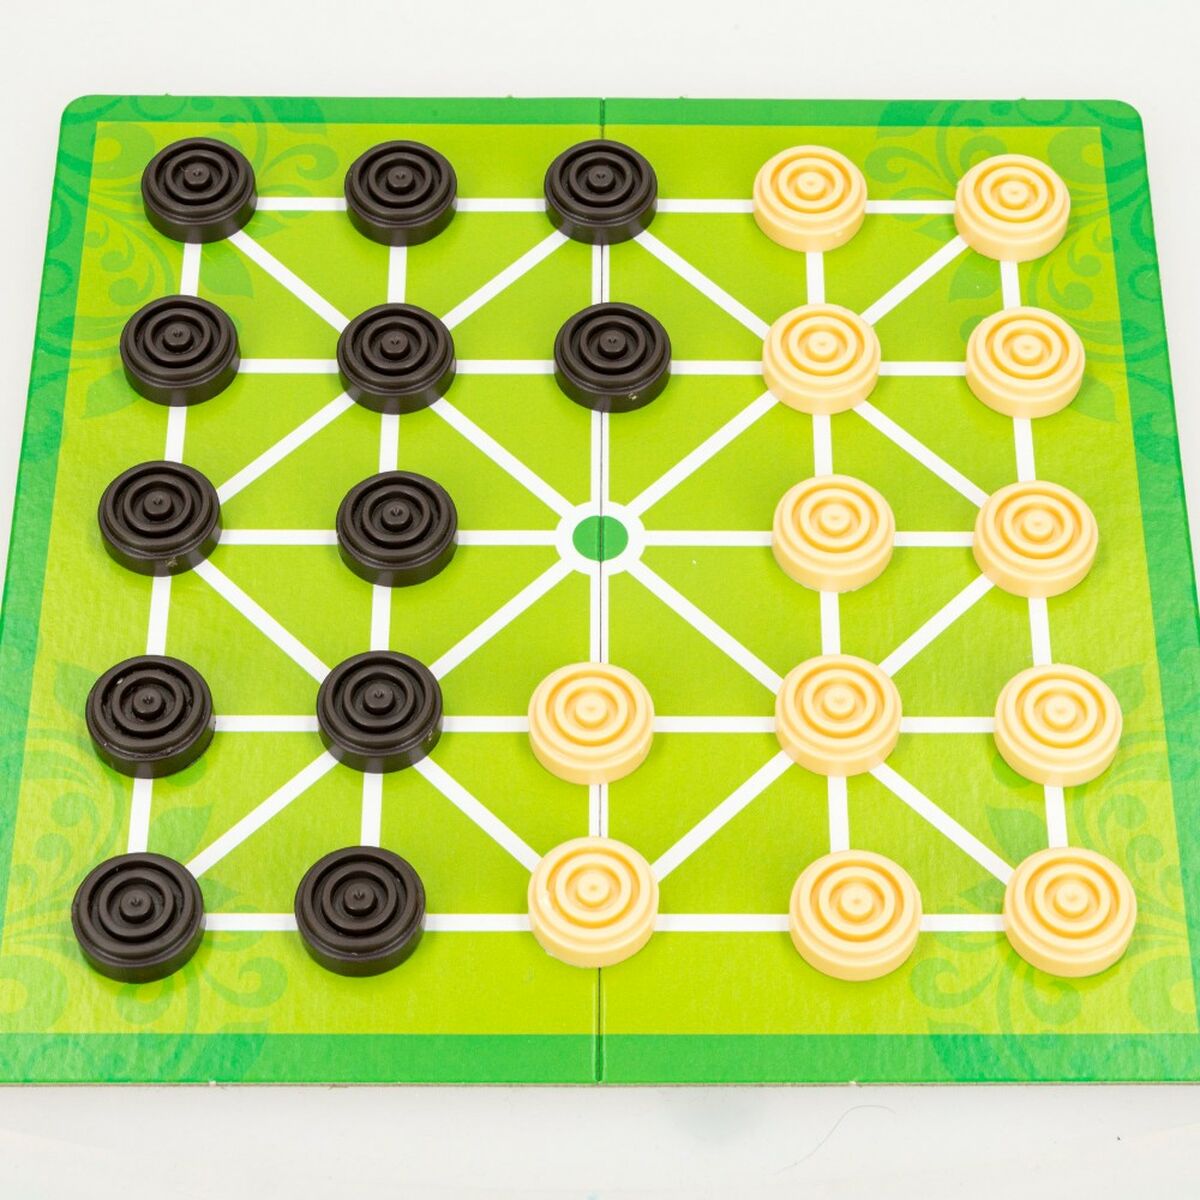 Board game Lisciani Juegos reunidos ES 26 x 1 x 26 cm (10 Units)